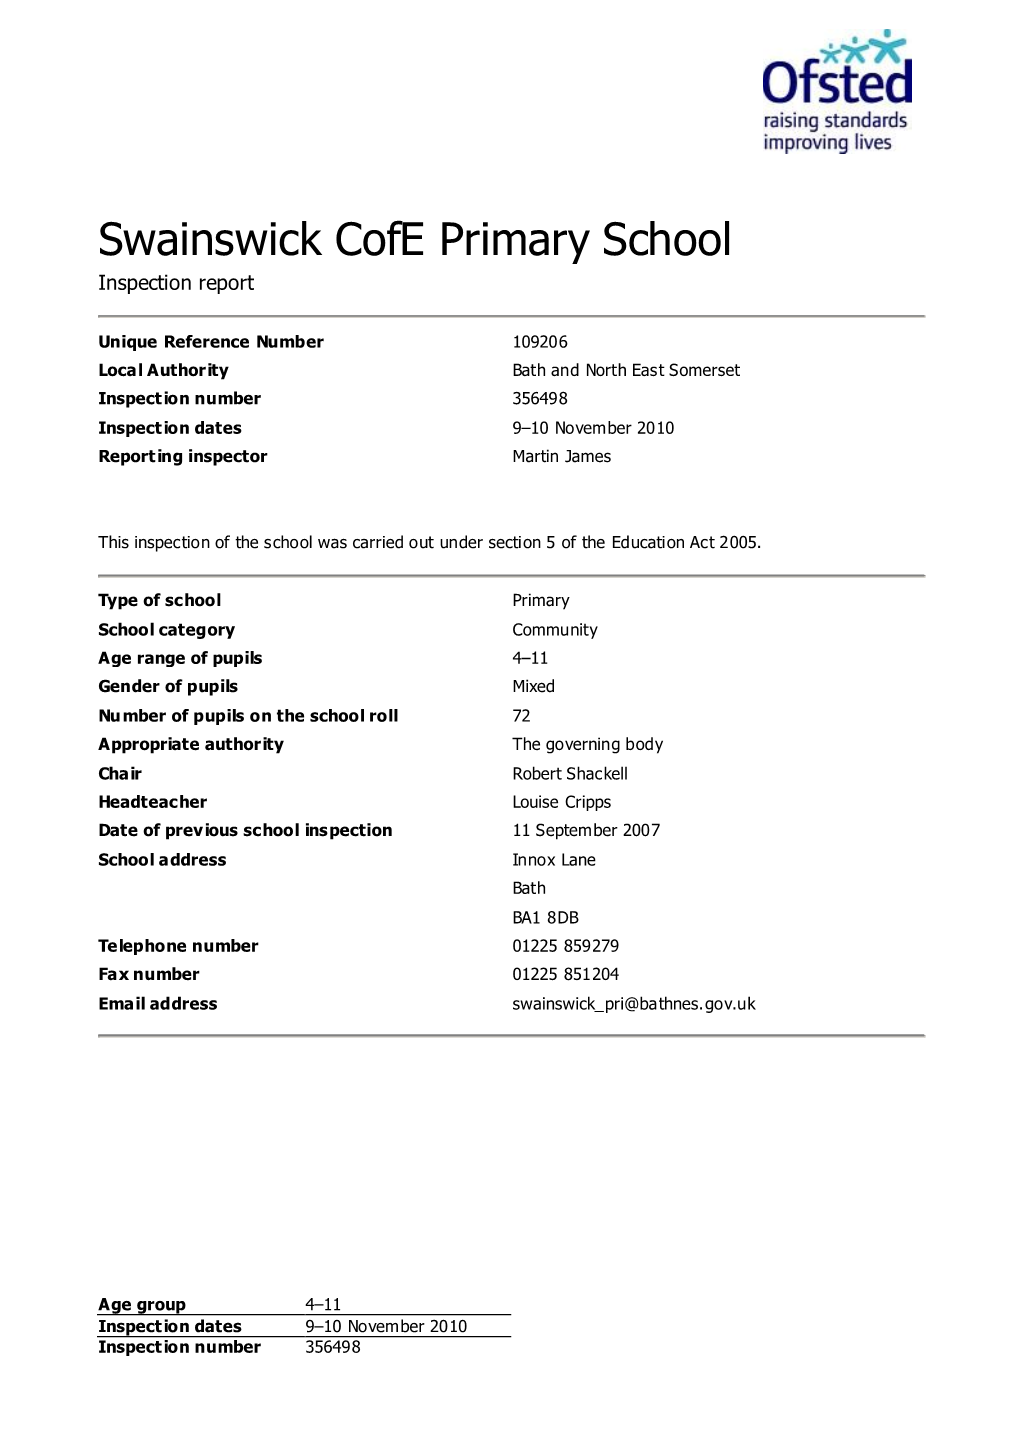 Swainswick Cofe Primary School Inspection Report